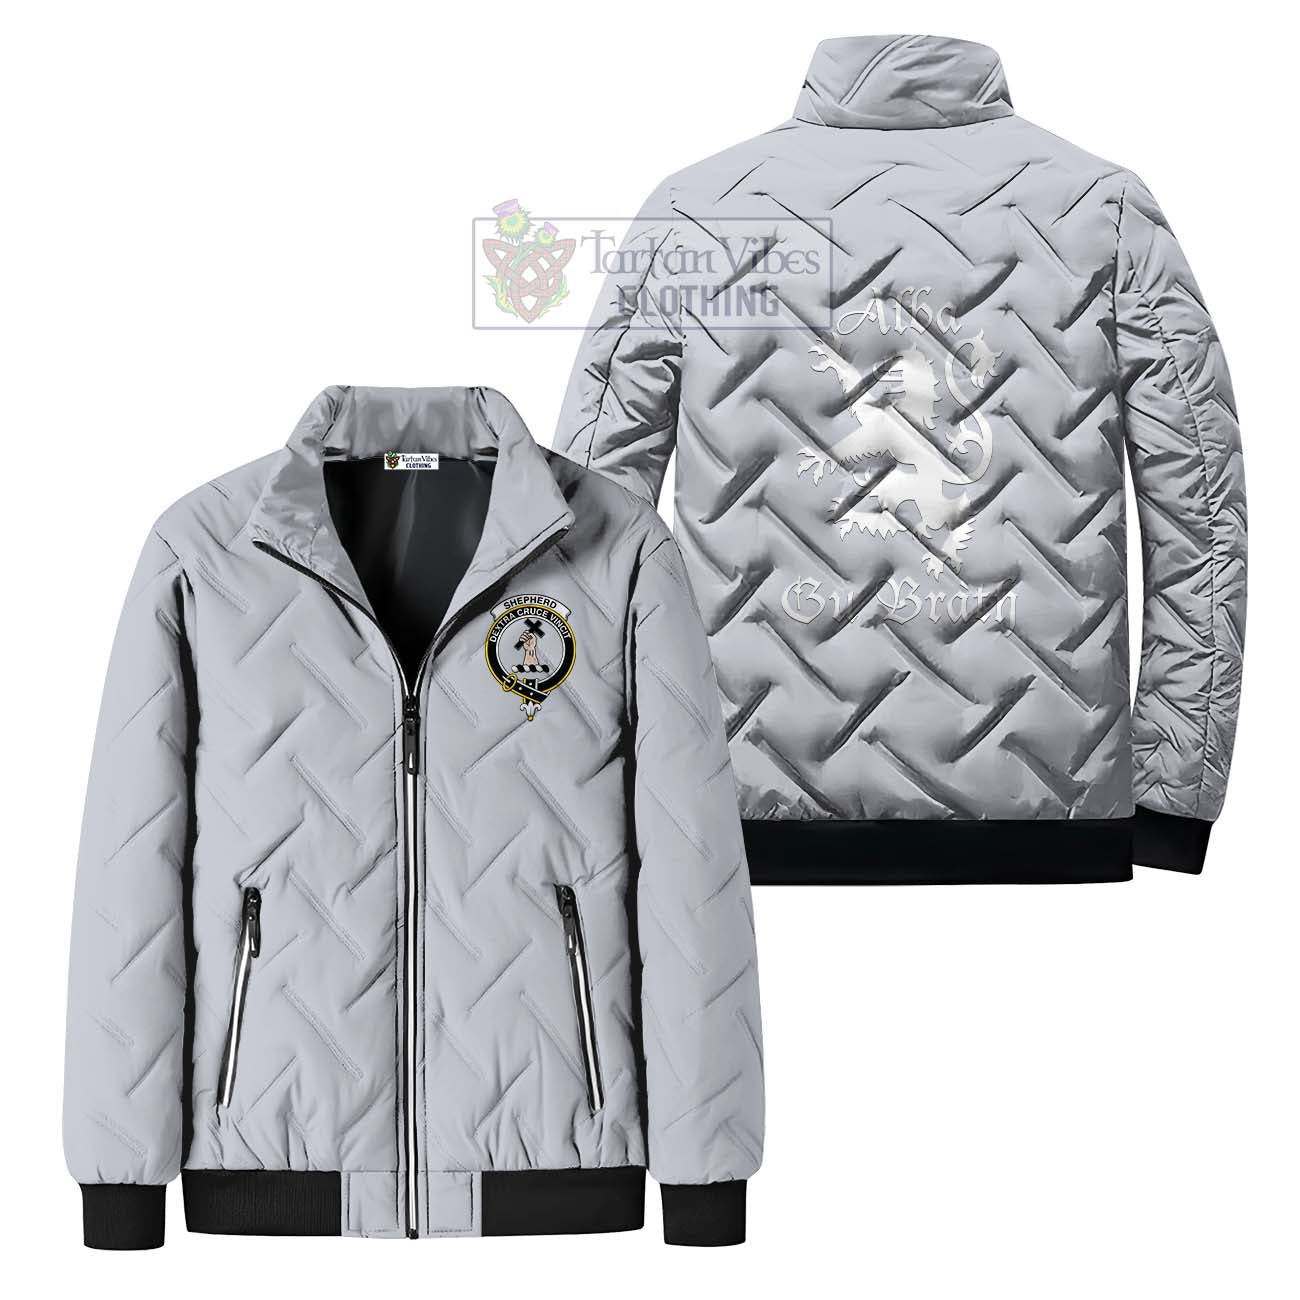 Tartan Vibes Clothing Shepherd Family Crest Padded Cotton Jacket Lion Rampant Alba Gu Brath Style